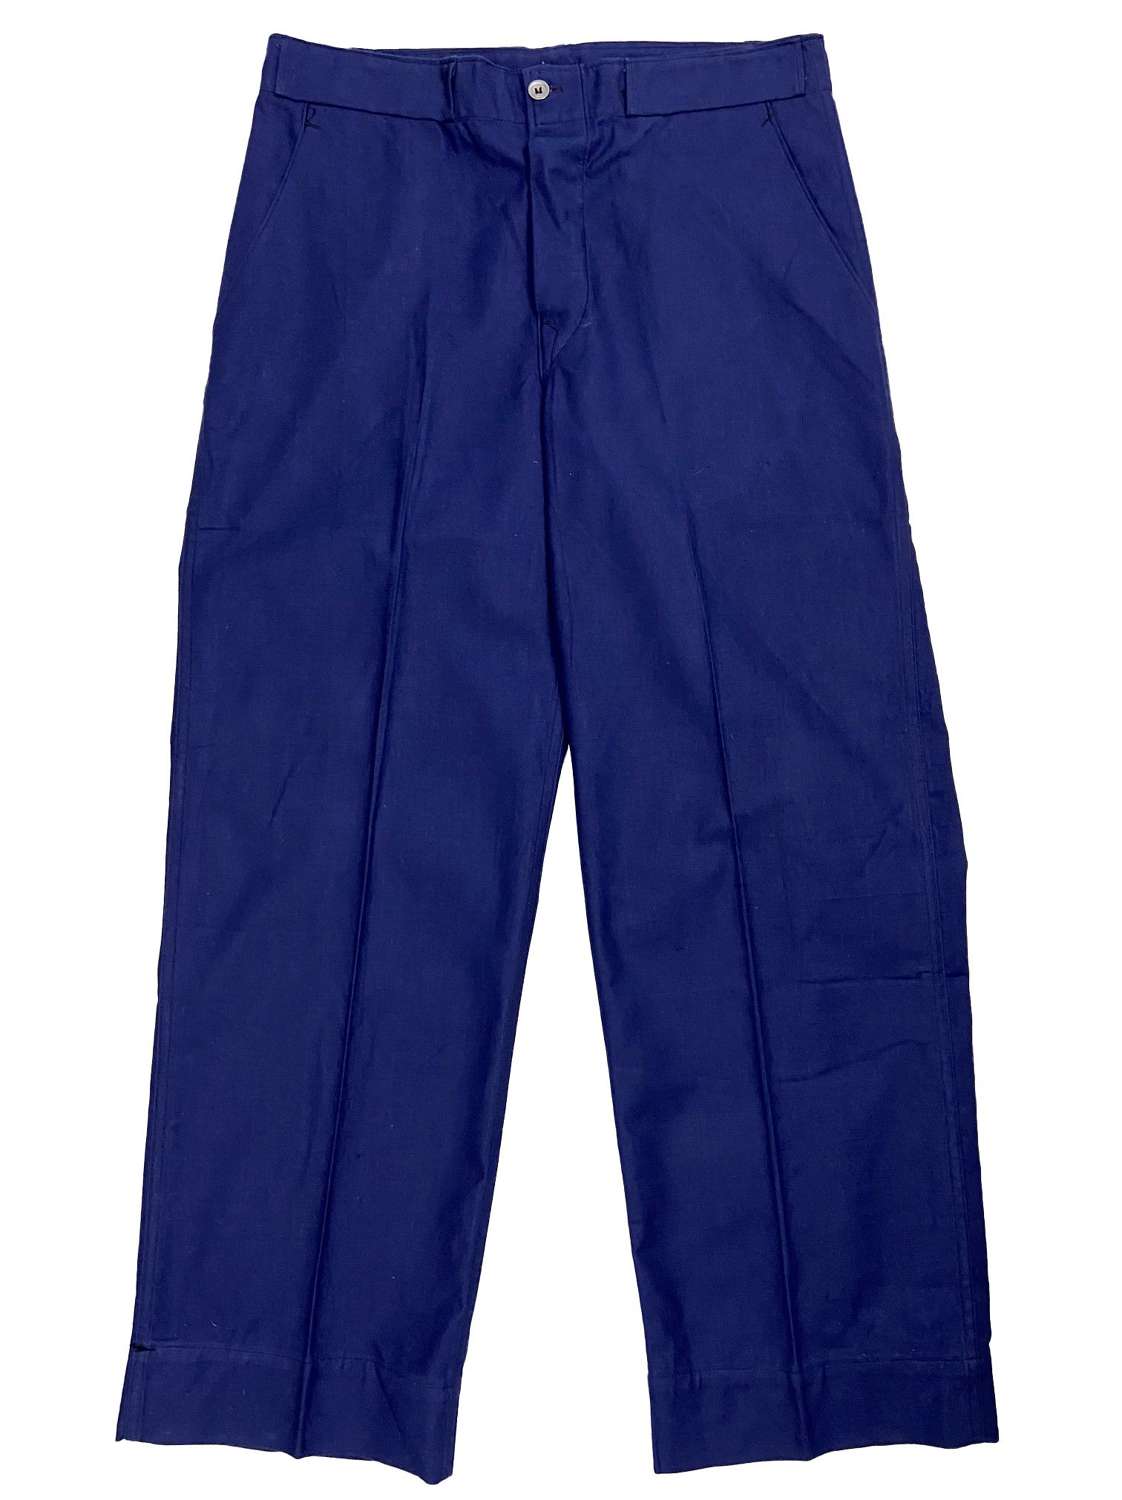 Original 1950s Swedish Military Blue Workwear Trousers